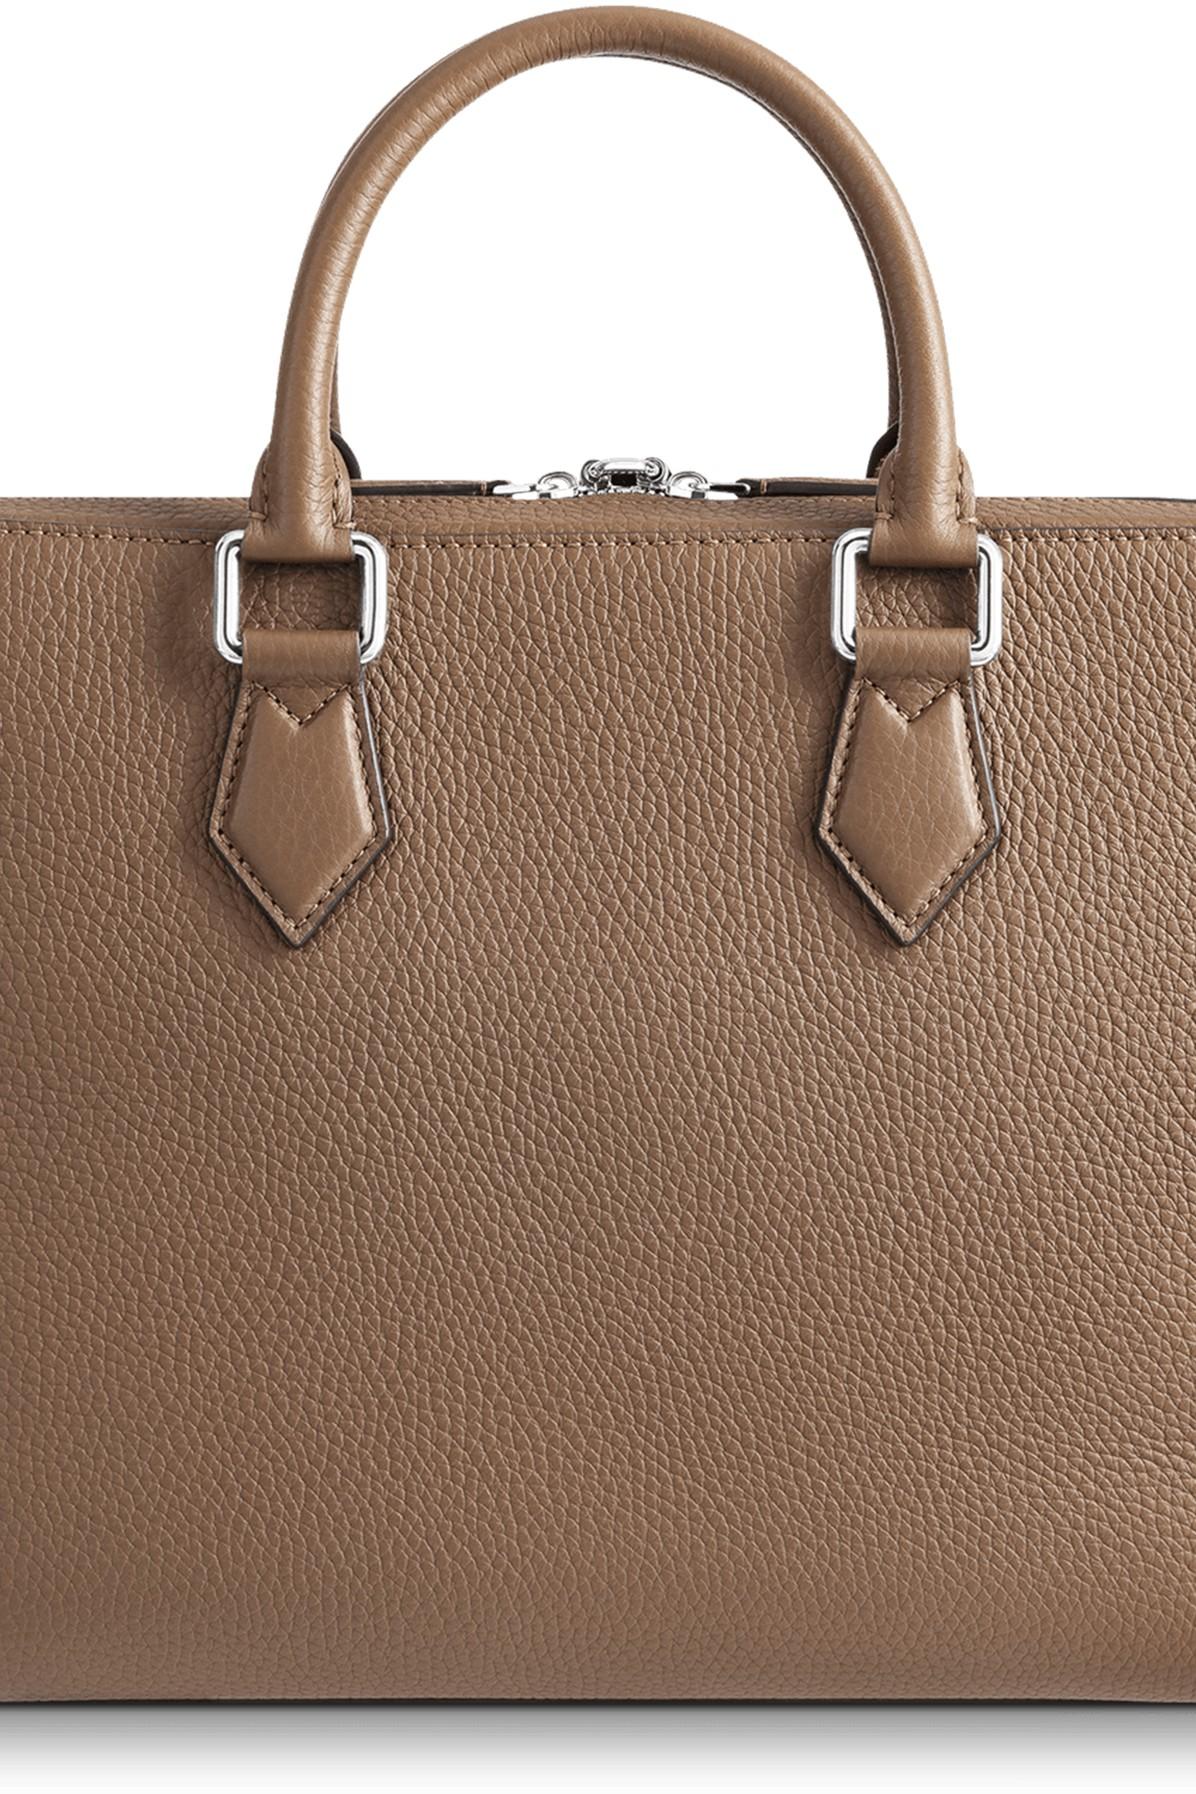 Louis Vuitton Makasa PDV PM Briefcase Brown Men's Business Bag